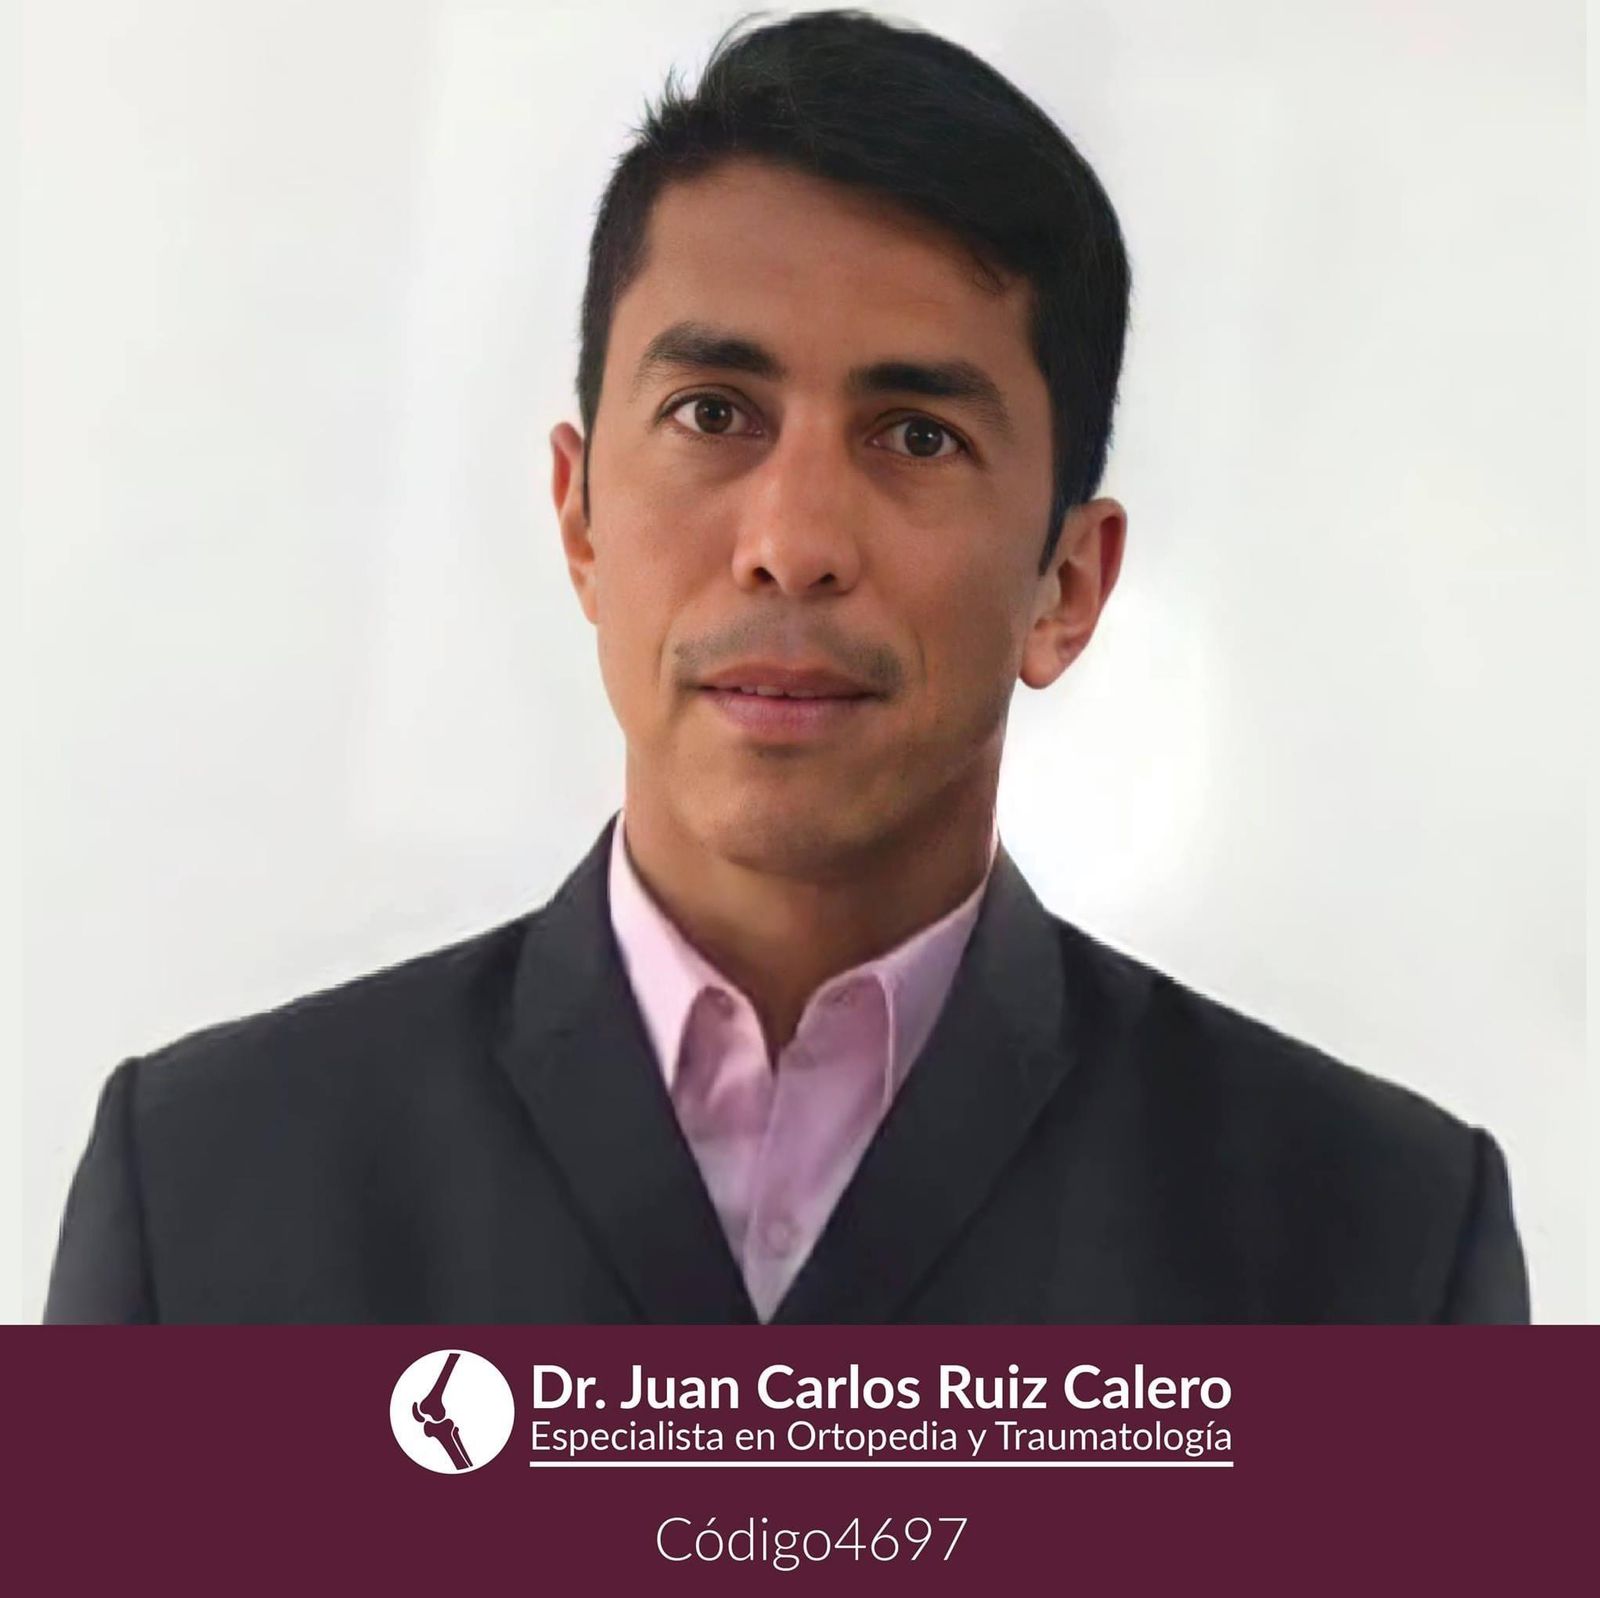 DR JUAN CARLOS RUIZ CALERO